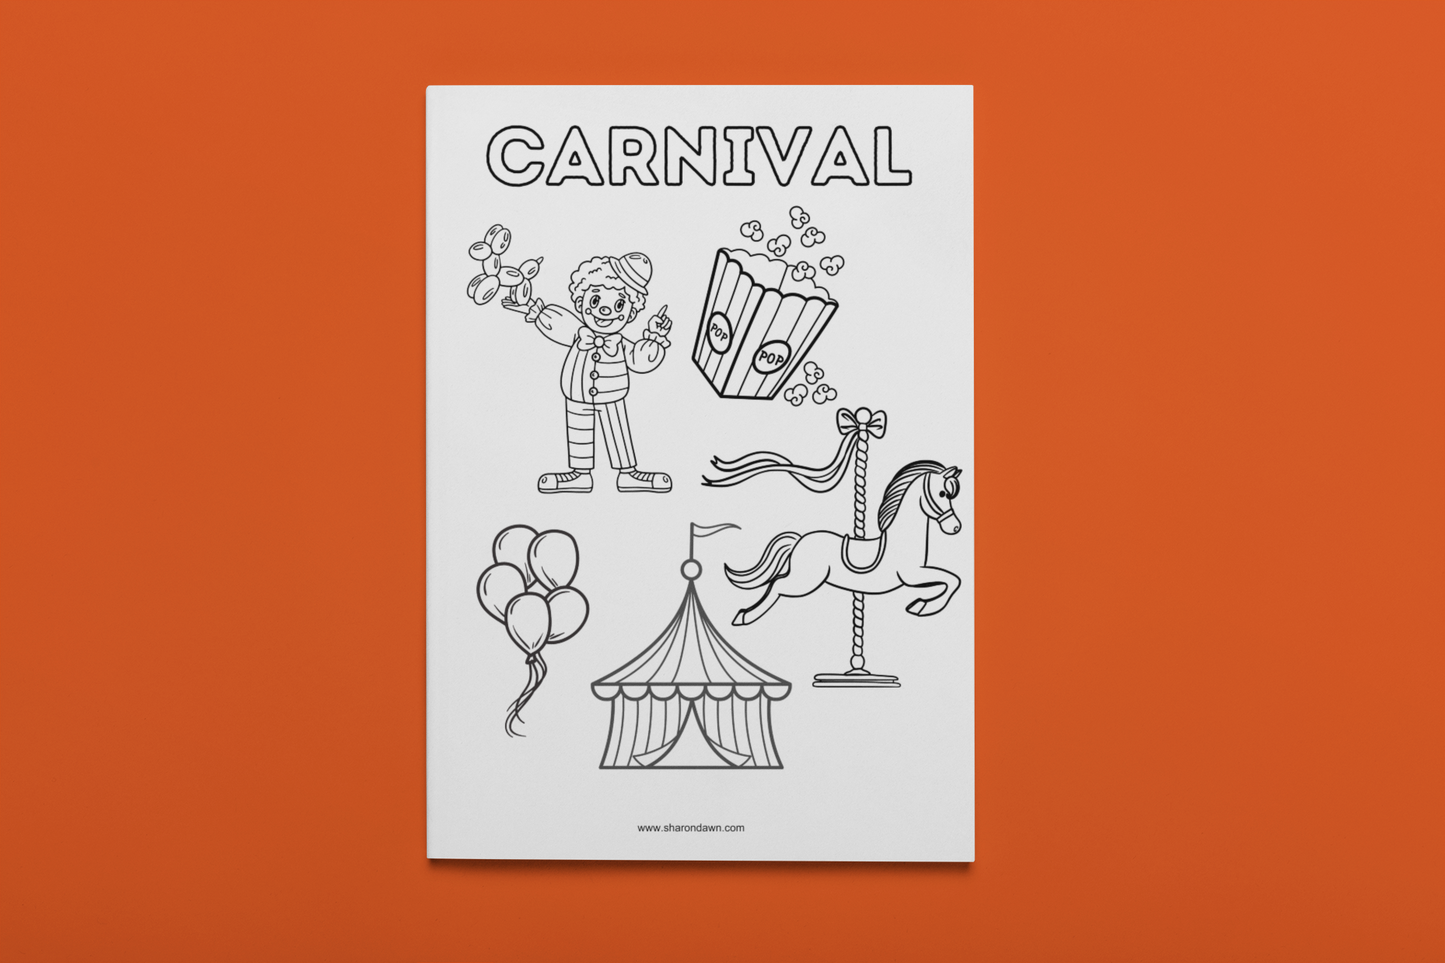 Carnival - Colouring Sheet - Printable Digital Download ~ Sharon Dawn Collection